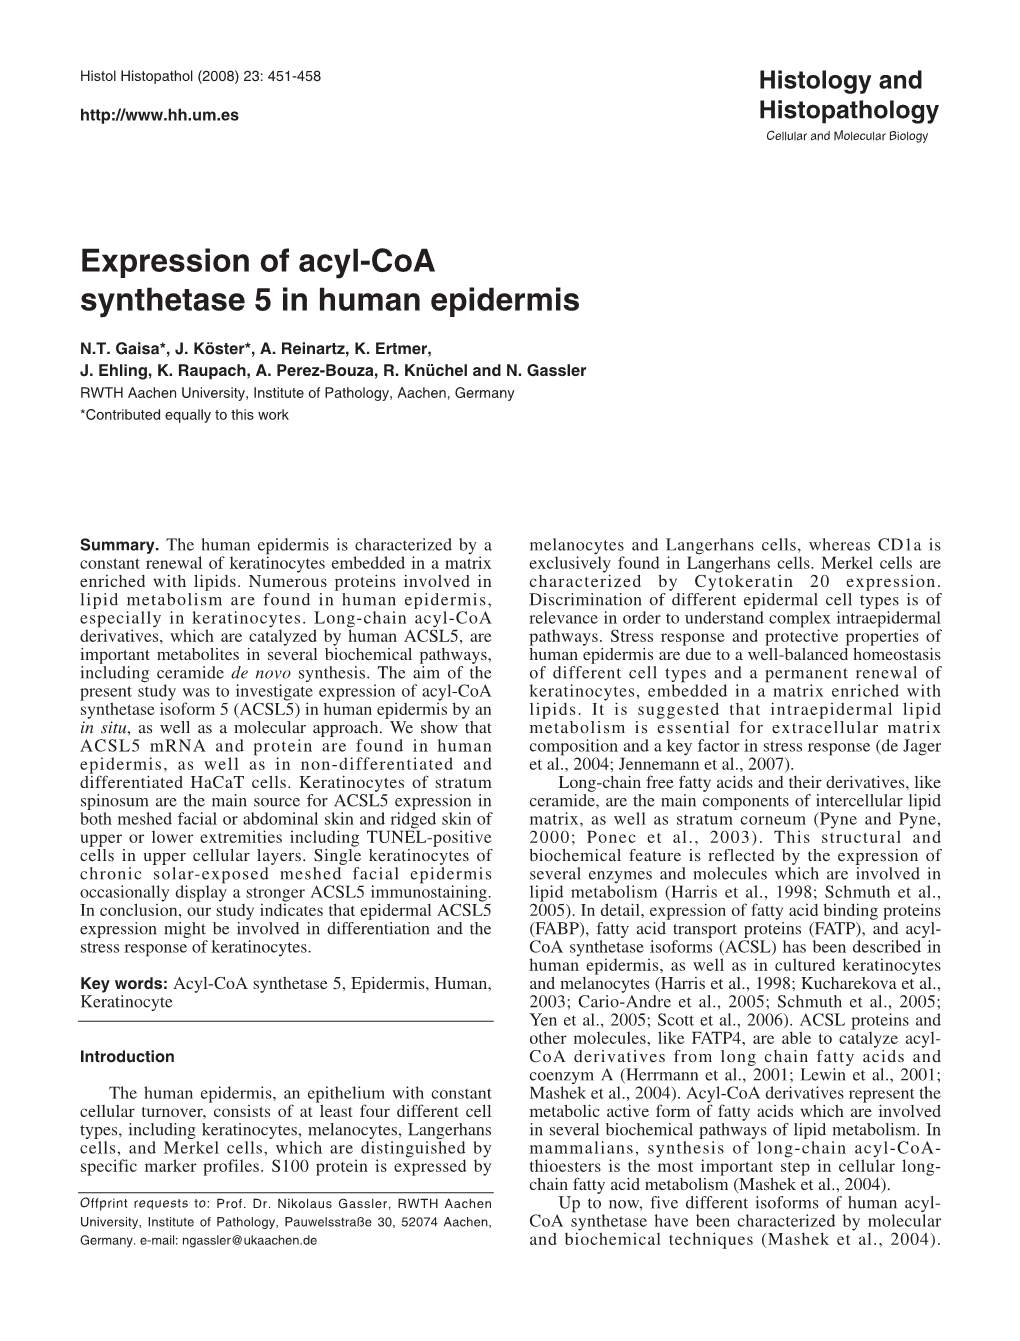 Expression of Acyl-Coa Synthetase 5 in Human Epidermis